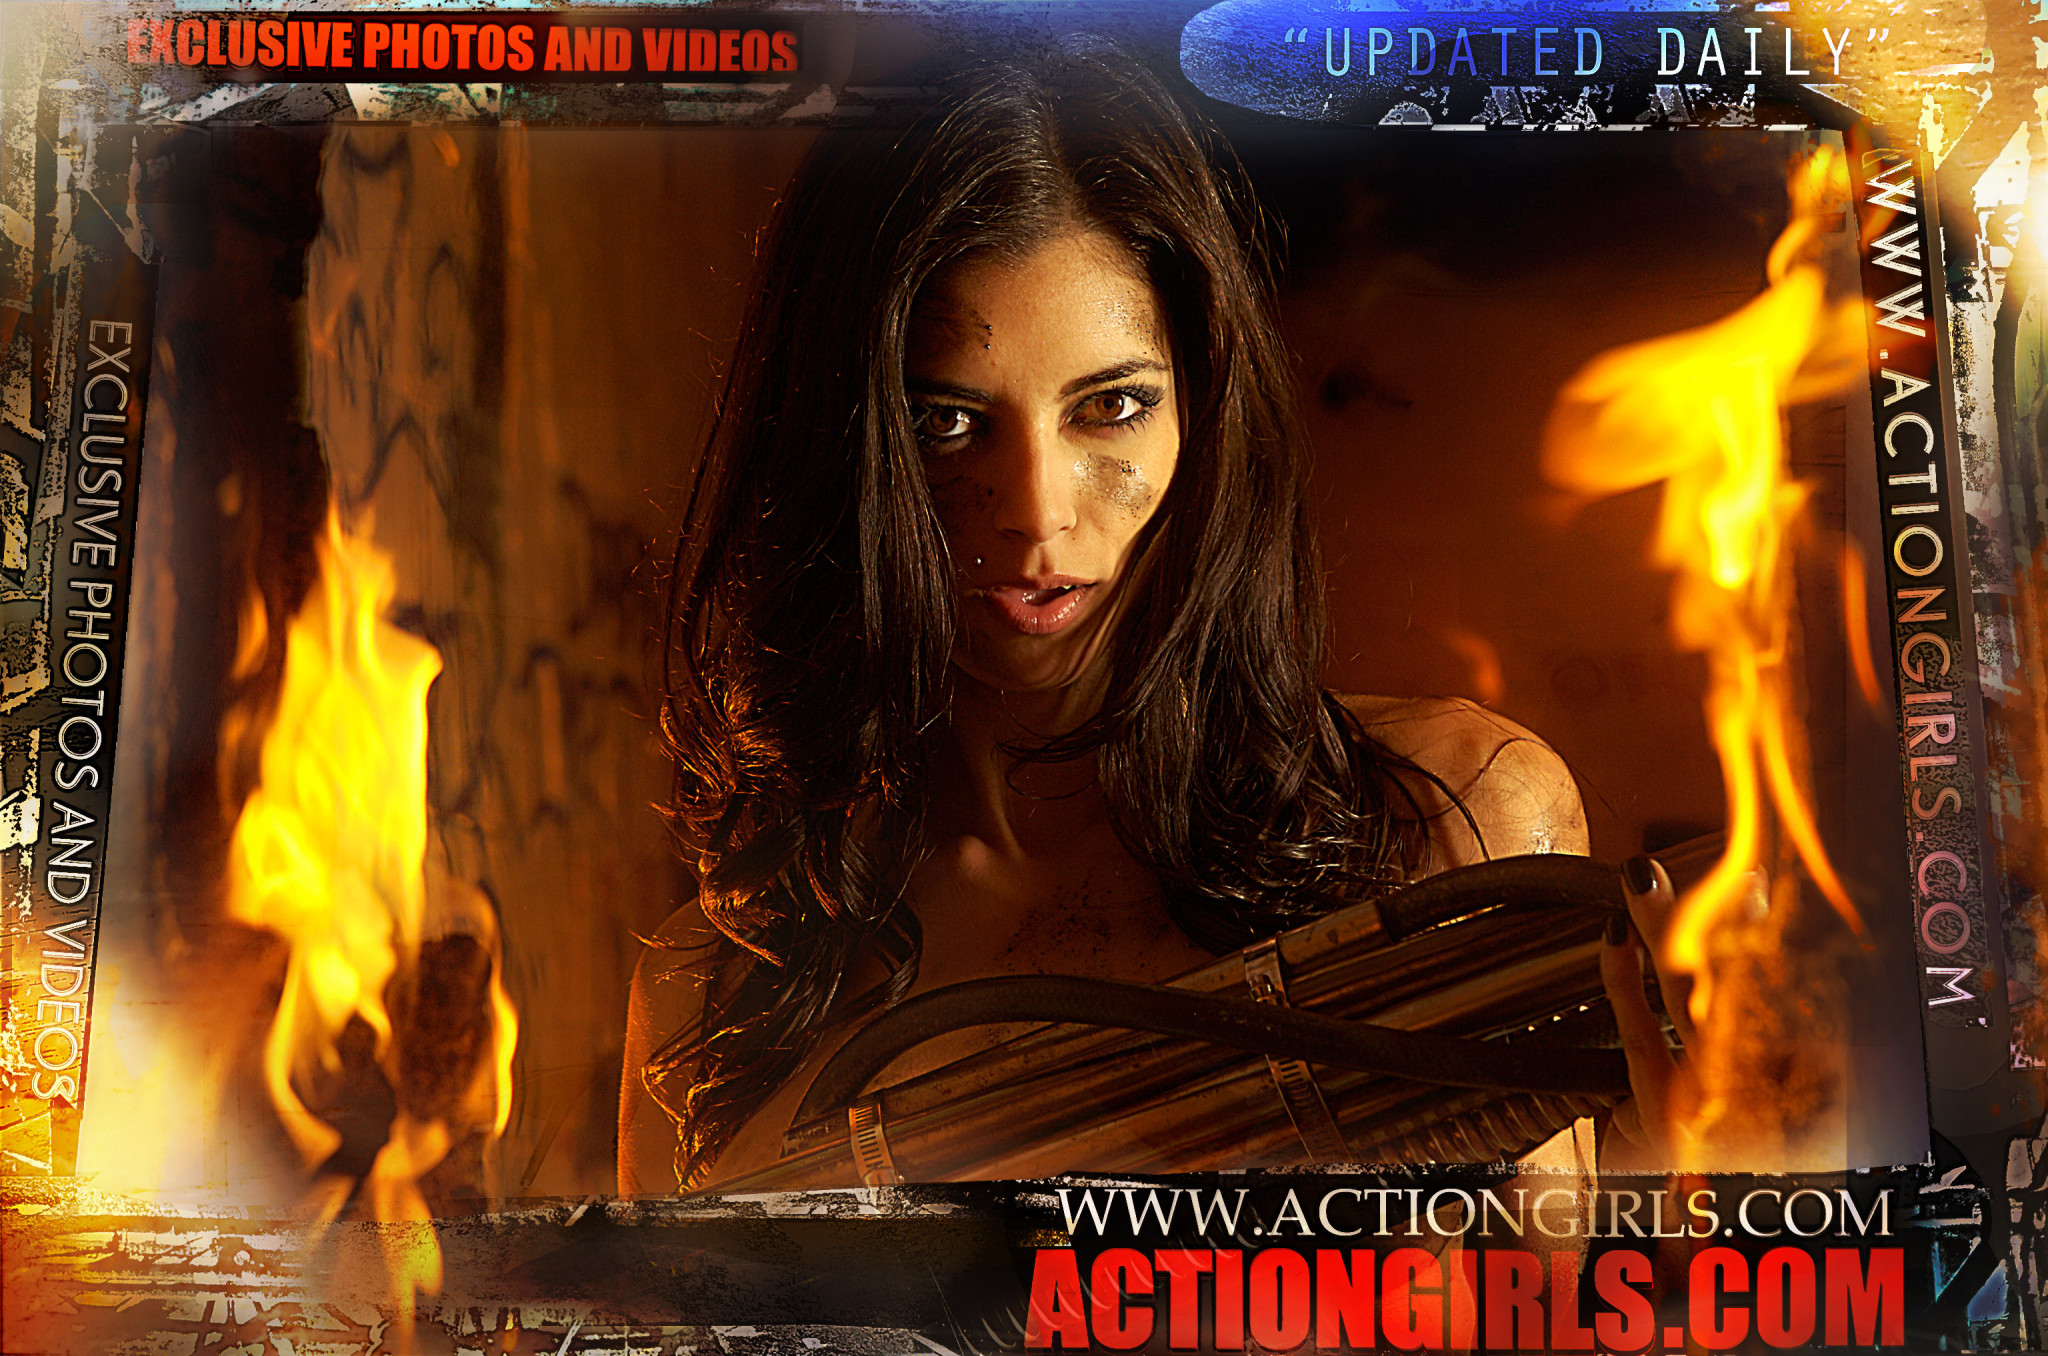 Esclusivo actiongirls web poster deluxe ser 5 foto actiongirl
 #70962400